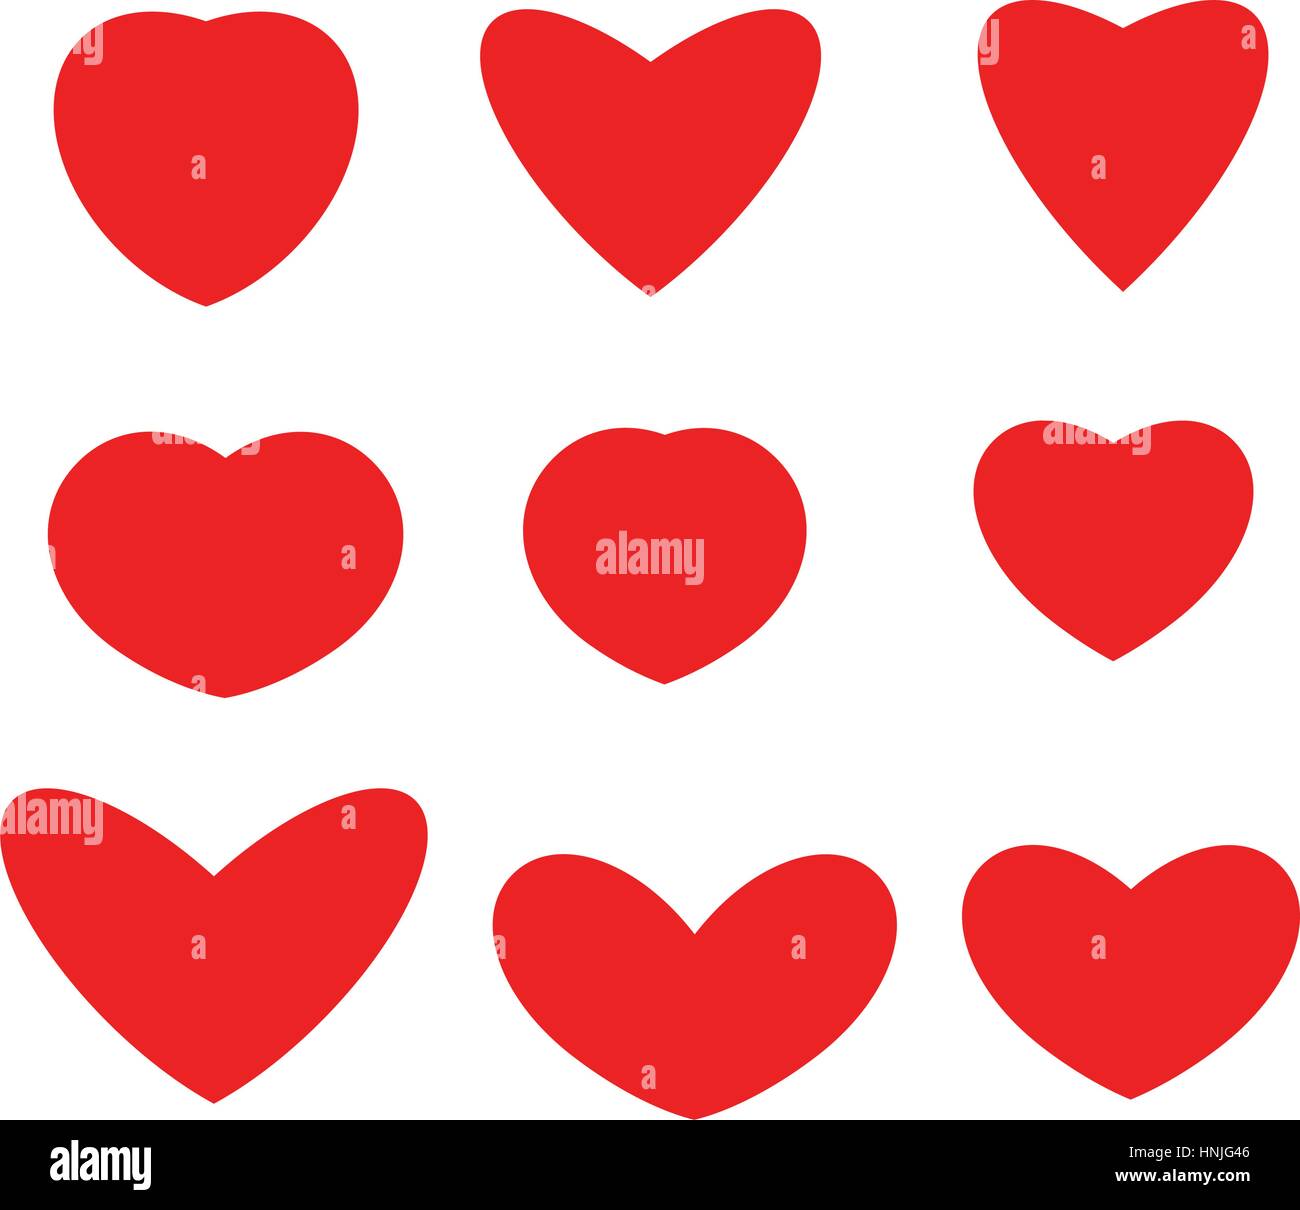 Isolierte Abstrakt rot Farbe Herzen in verschiedenen Formen Logos Sammlung, Liebe Symbole Set Vektor-Illustration. Stock Vektor